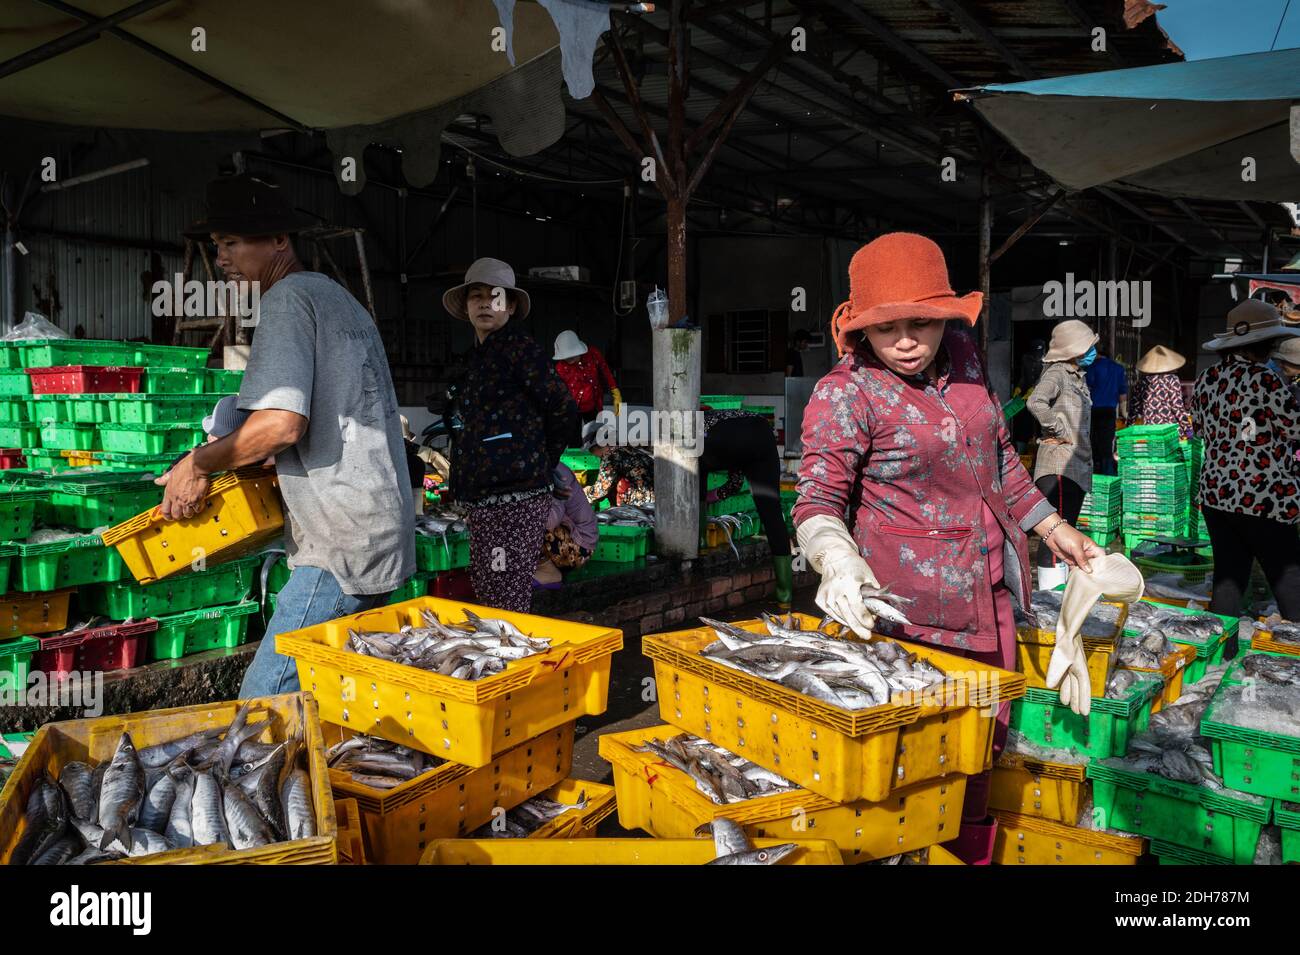 Vendors working their fish stalls in the market, Phuoc Hai, Vietnam Stock Photo